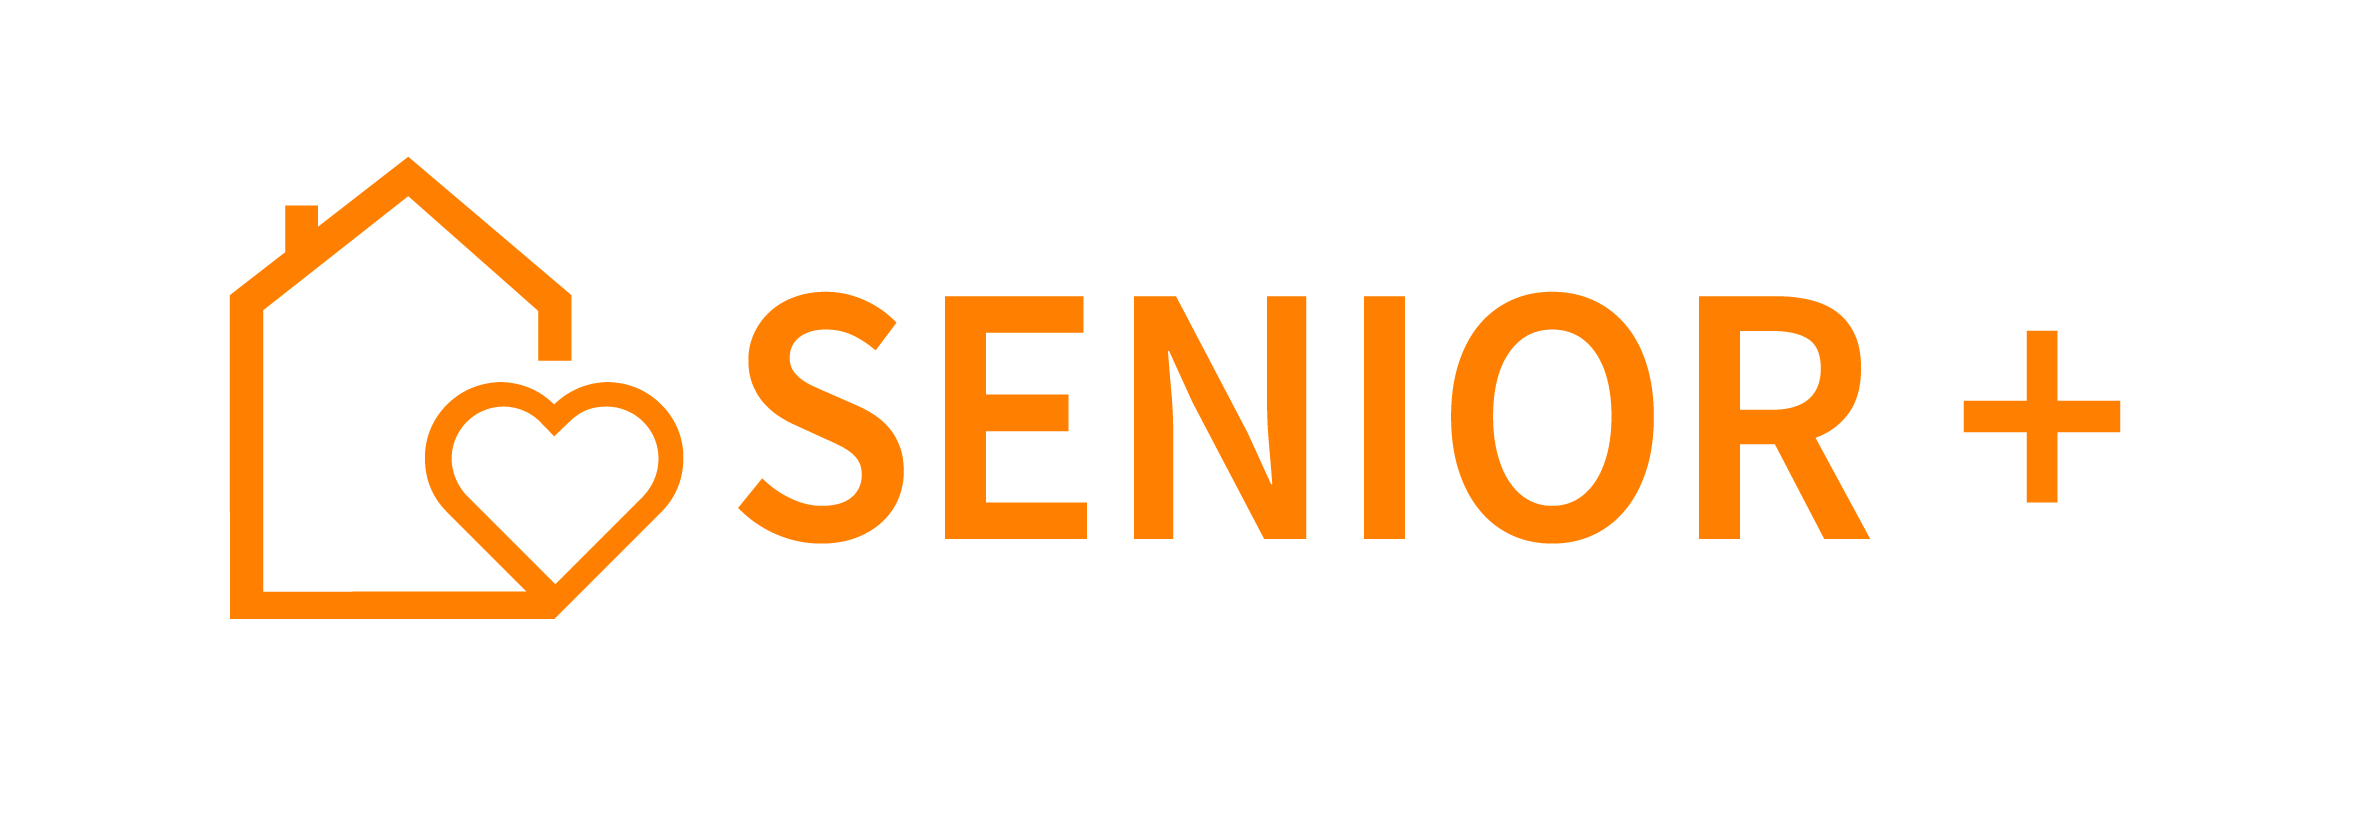 Senior+ logo